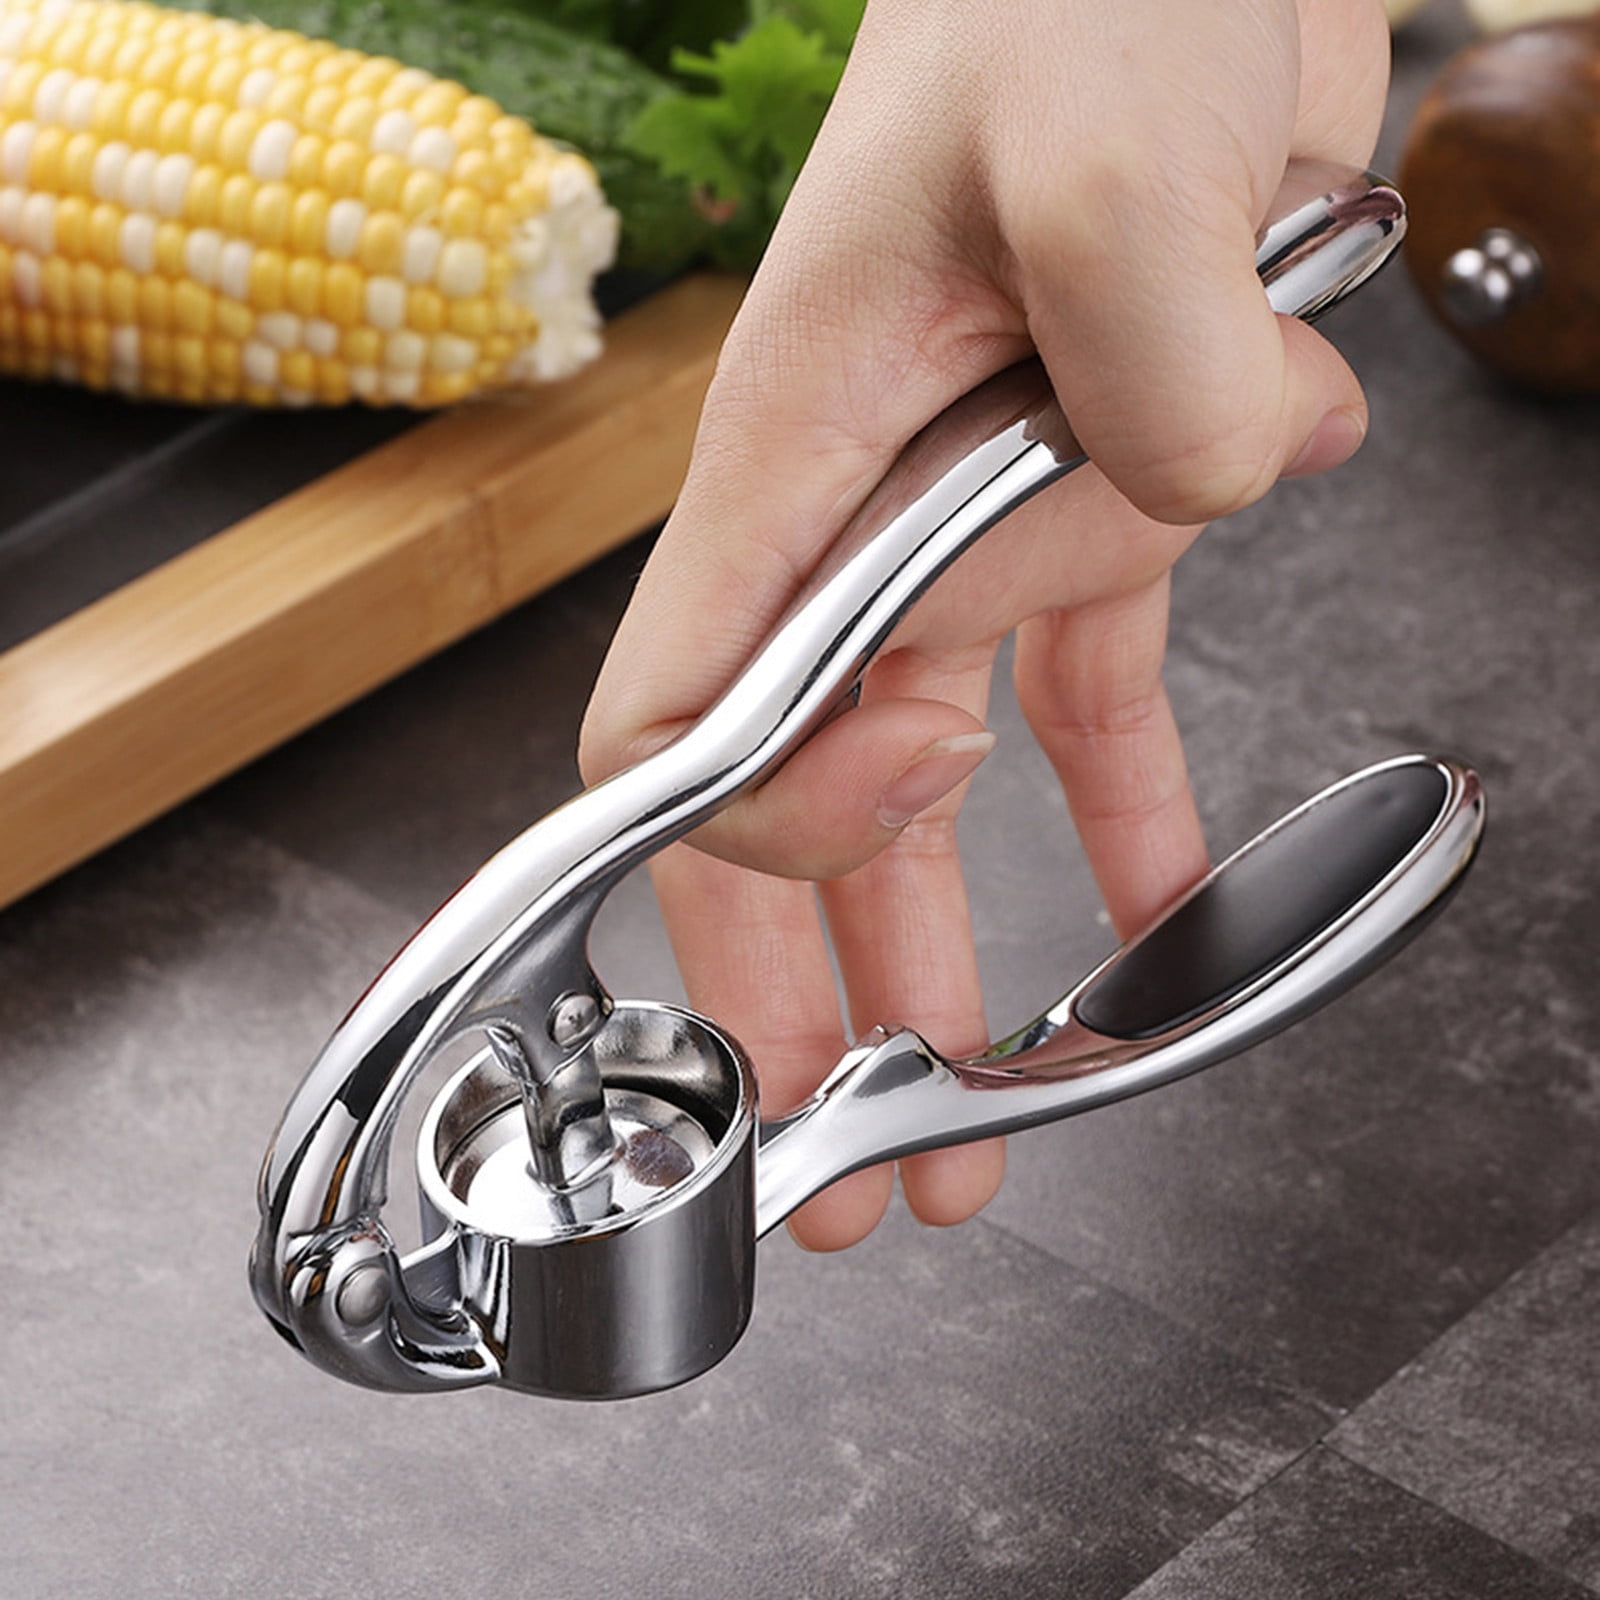 Stainless Steel Manual Garlic Press Crushers Squeezer Masher Home Kitchen Tool 